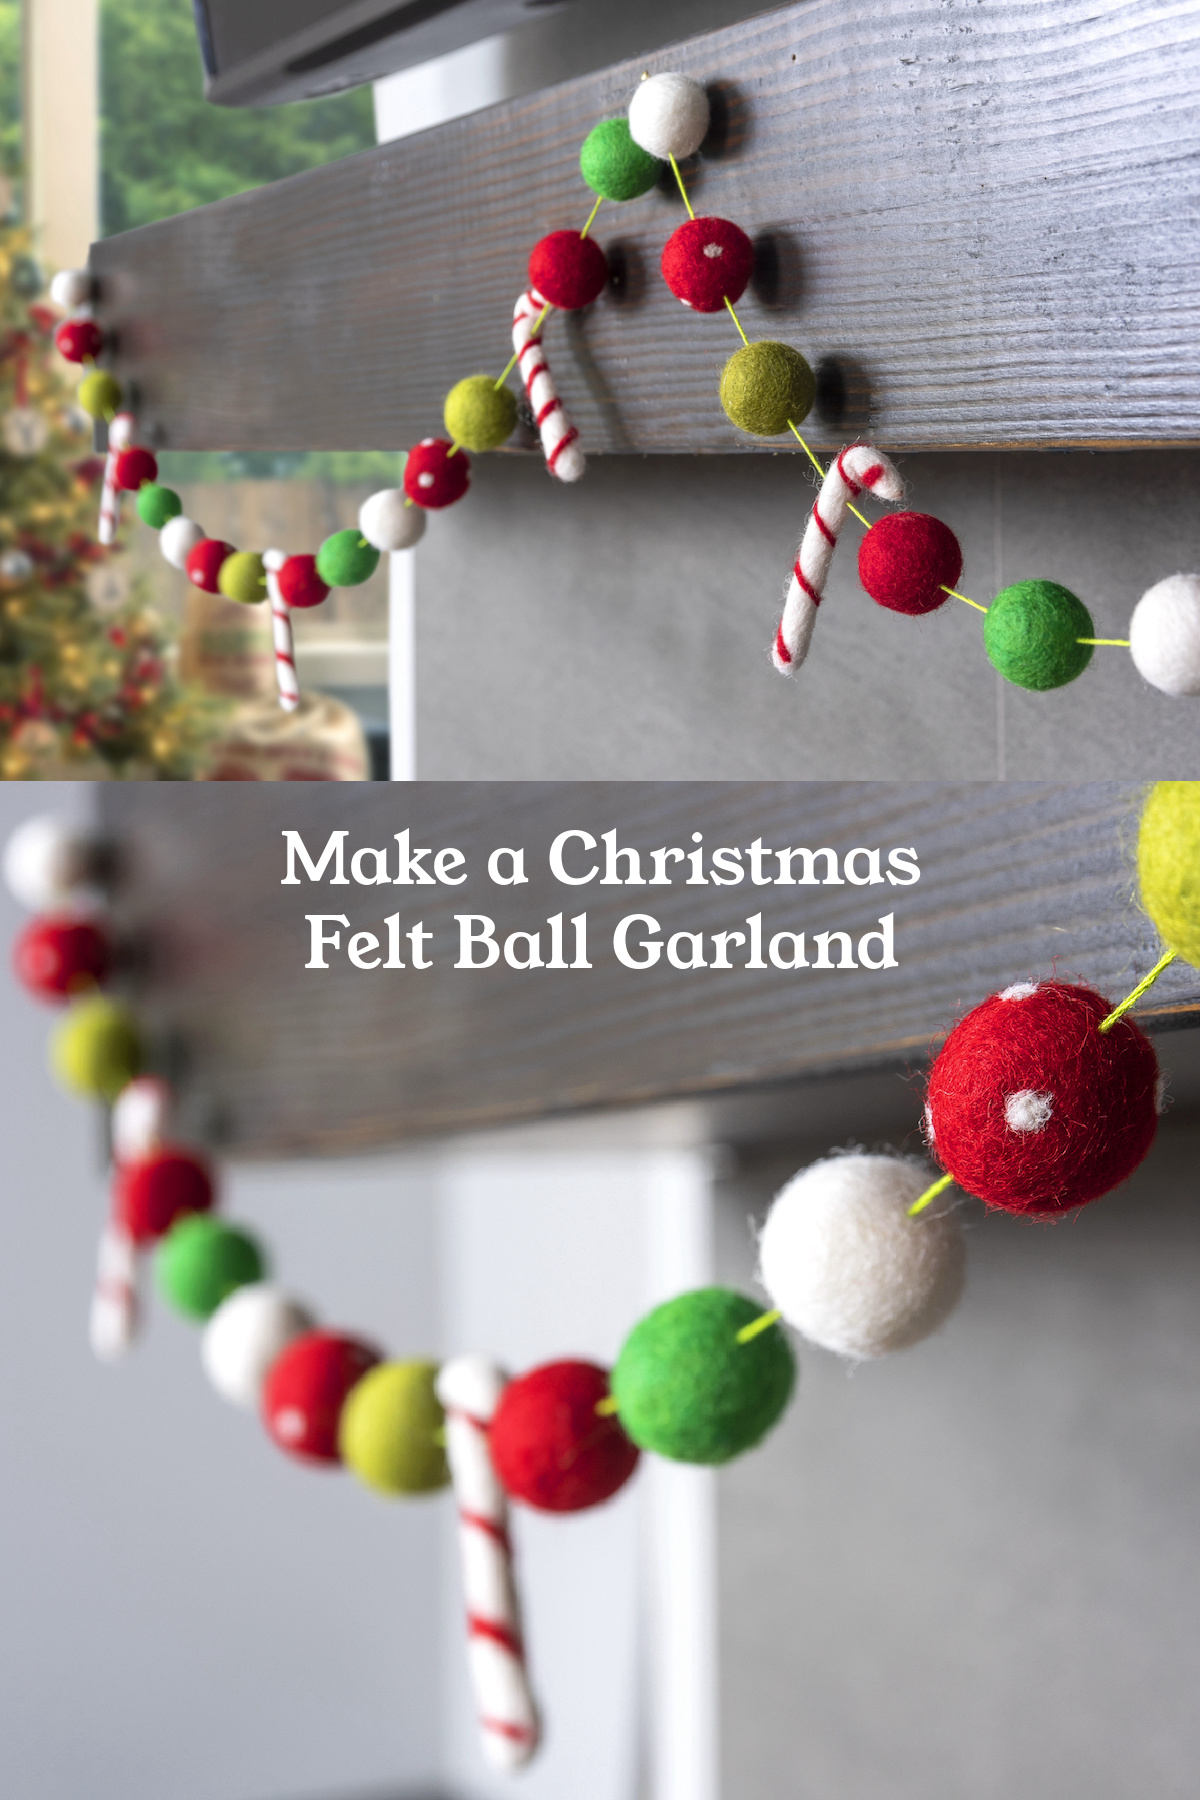 How to make a Christmas felt ball garland